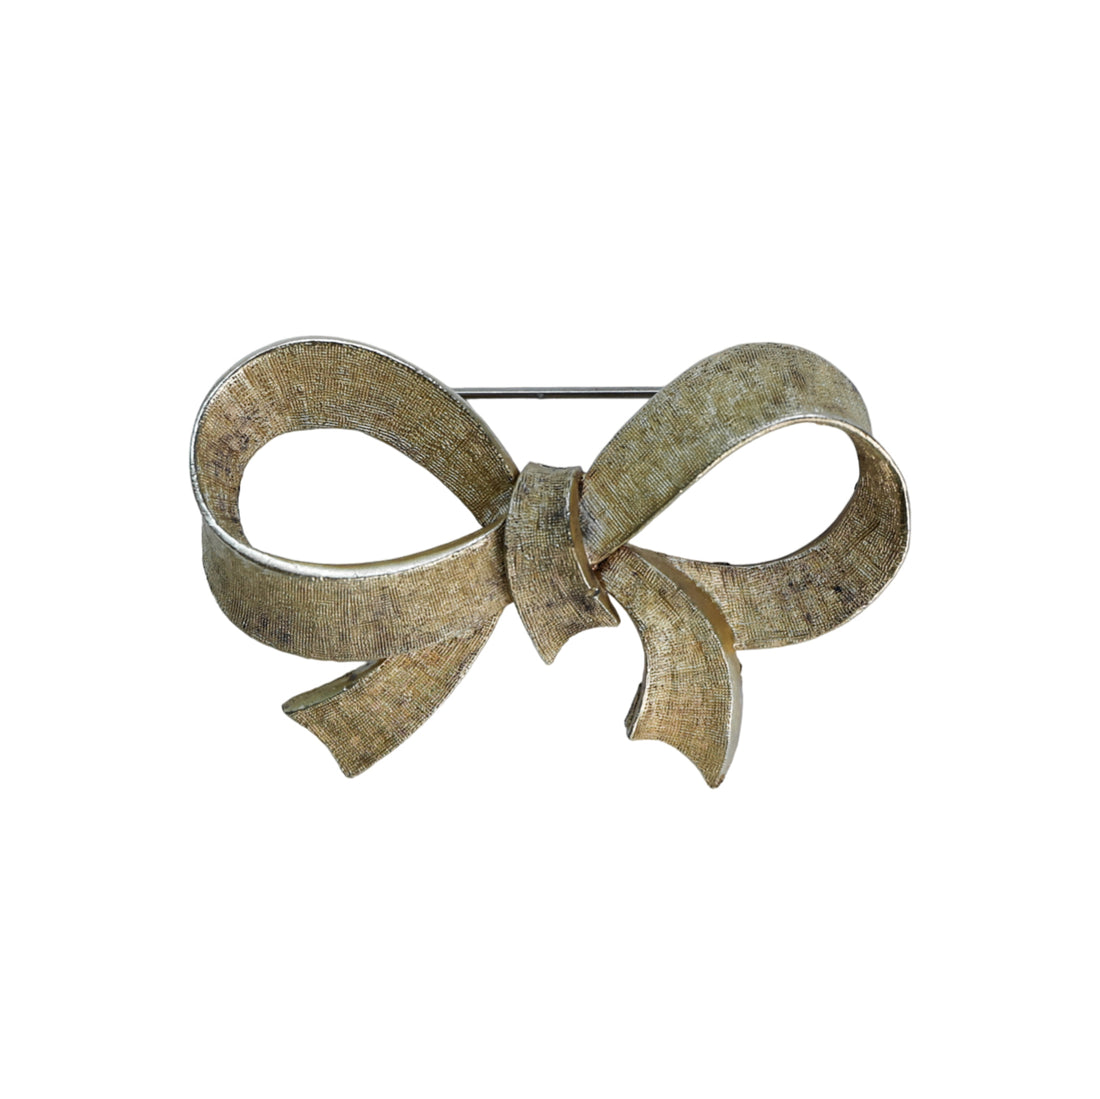 Balenciaga brooch in the shape of a bow